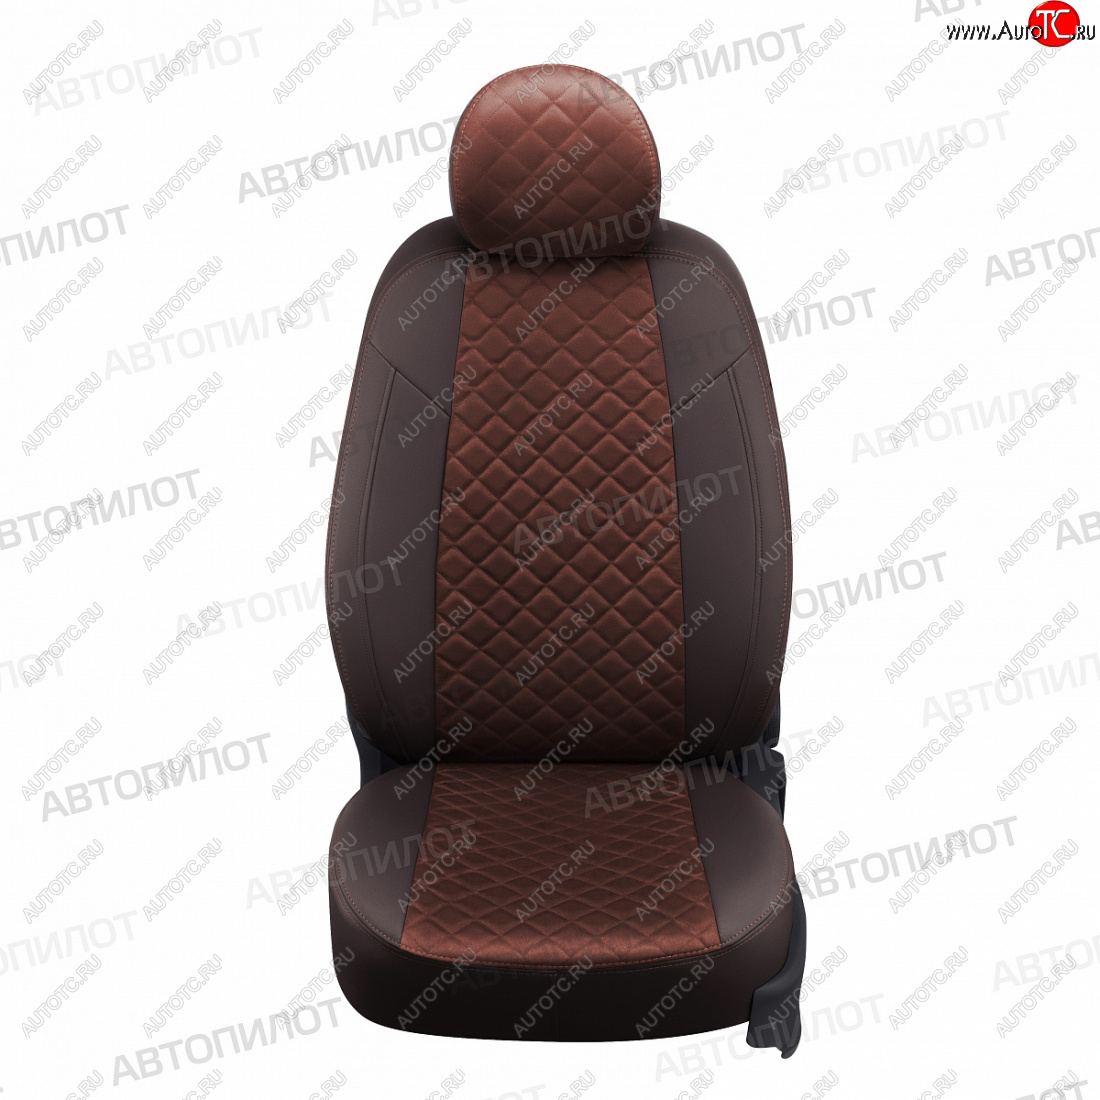 21 599 р. Чехлы сидений (экокожа/алькантара, 8 мест) Автопилот Ромб  Hyundai Staria  US4 (2021-2022) (шоколад)